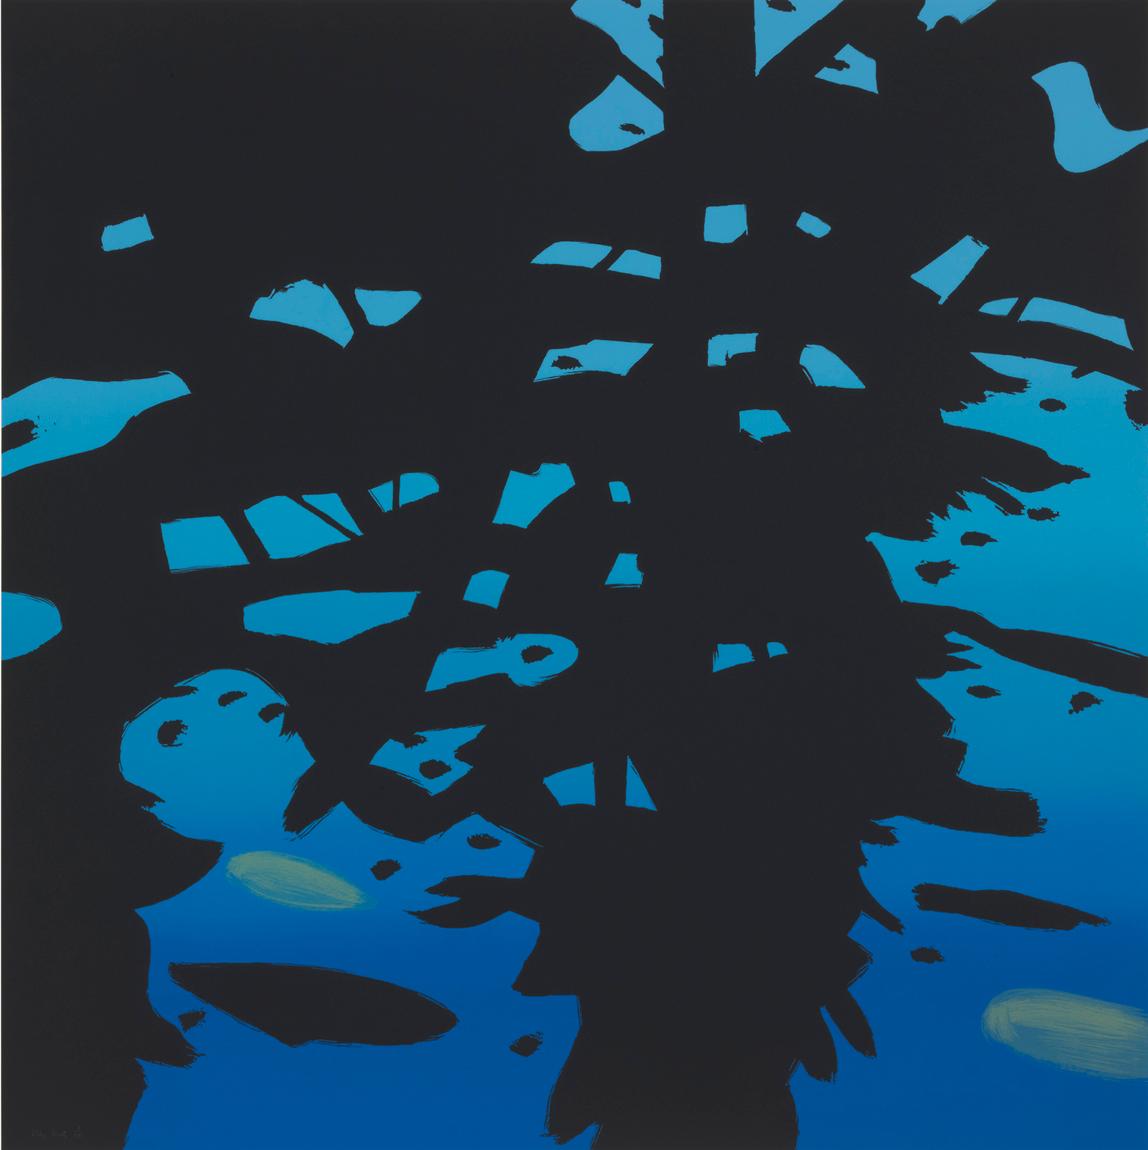 Reflection - Sea, Tree, Black, Blue, Night Sky, large-scale print